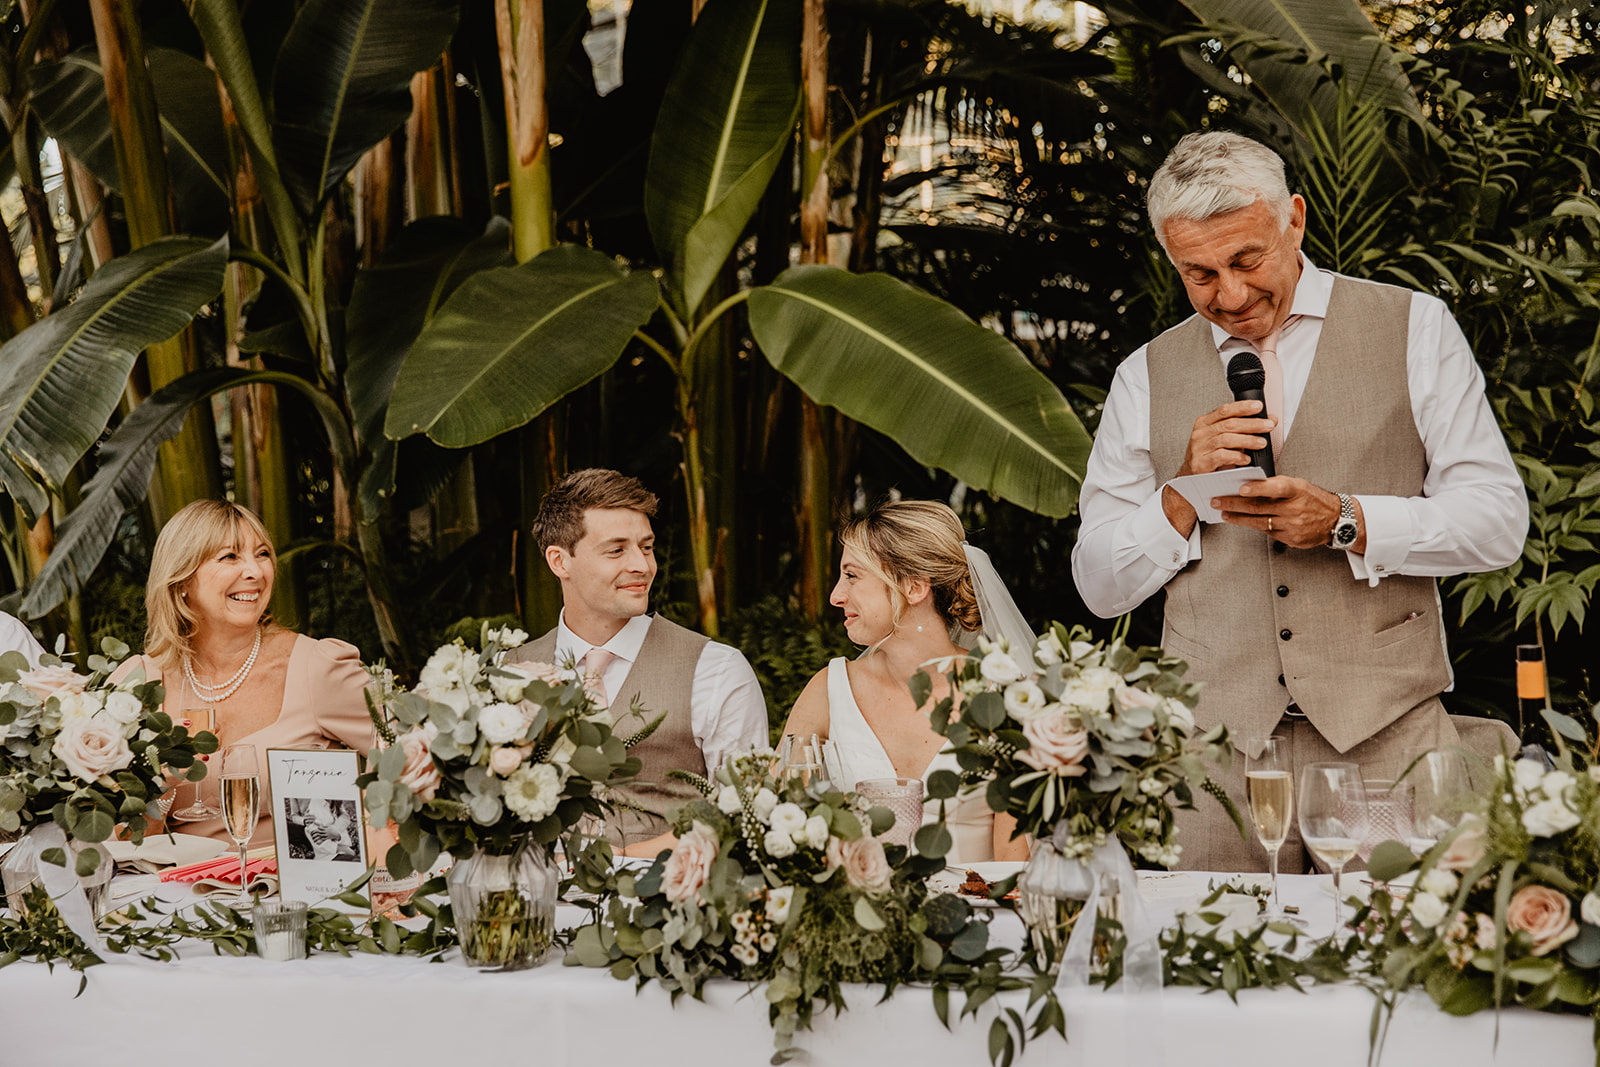 Wedding reception speeches at a RHS Gardens Wisley Wedding. By Olive Joy Photography